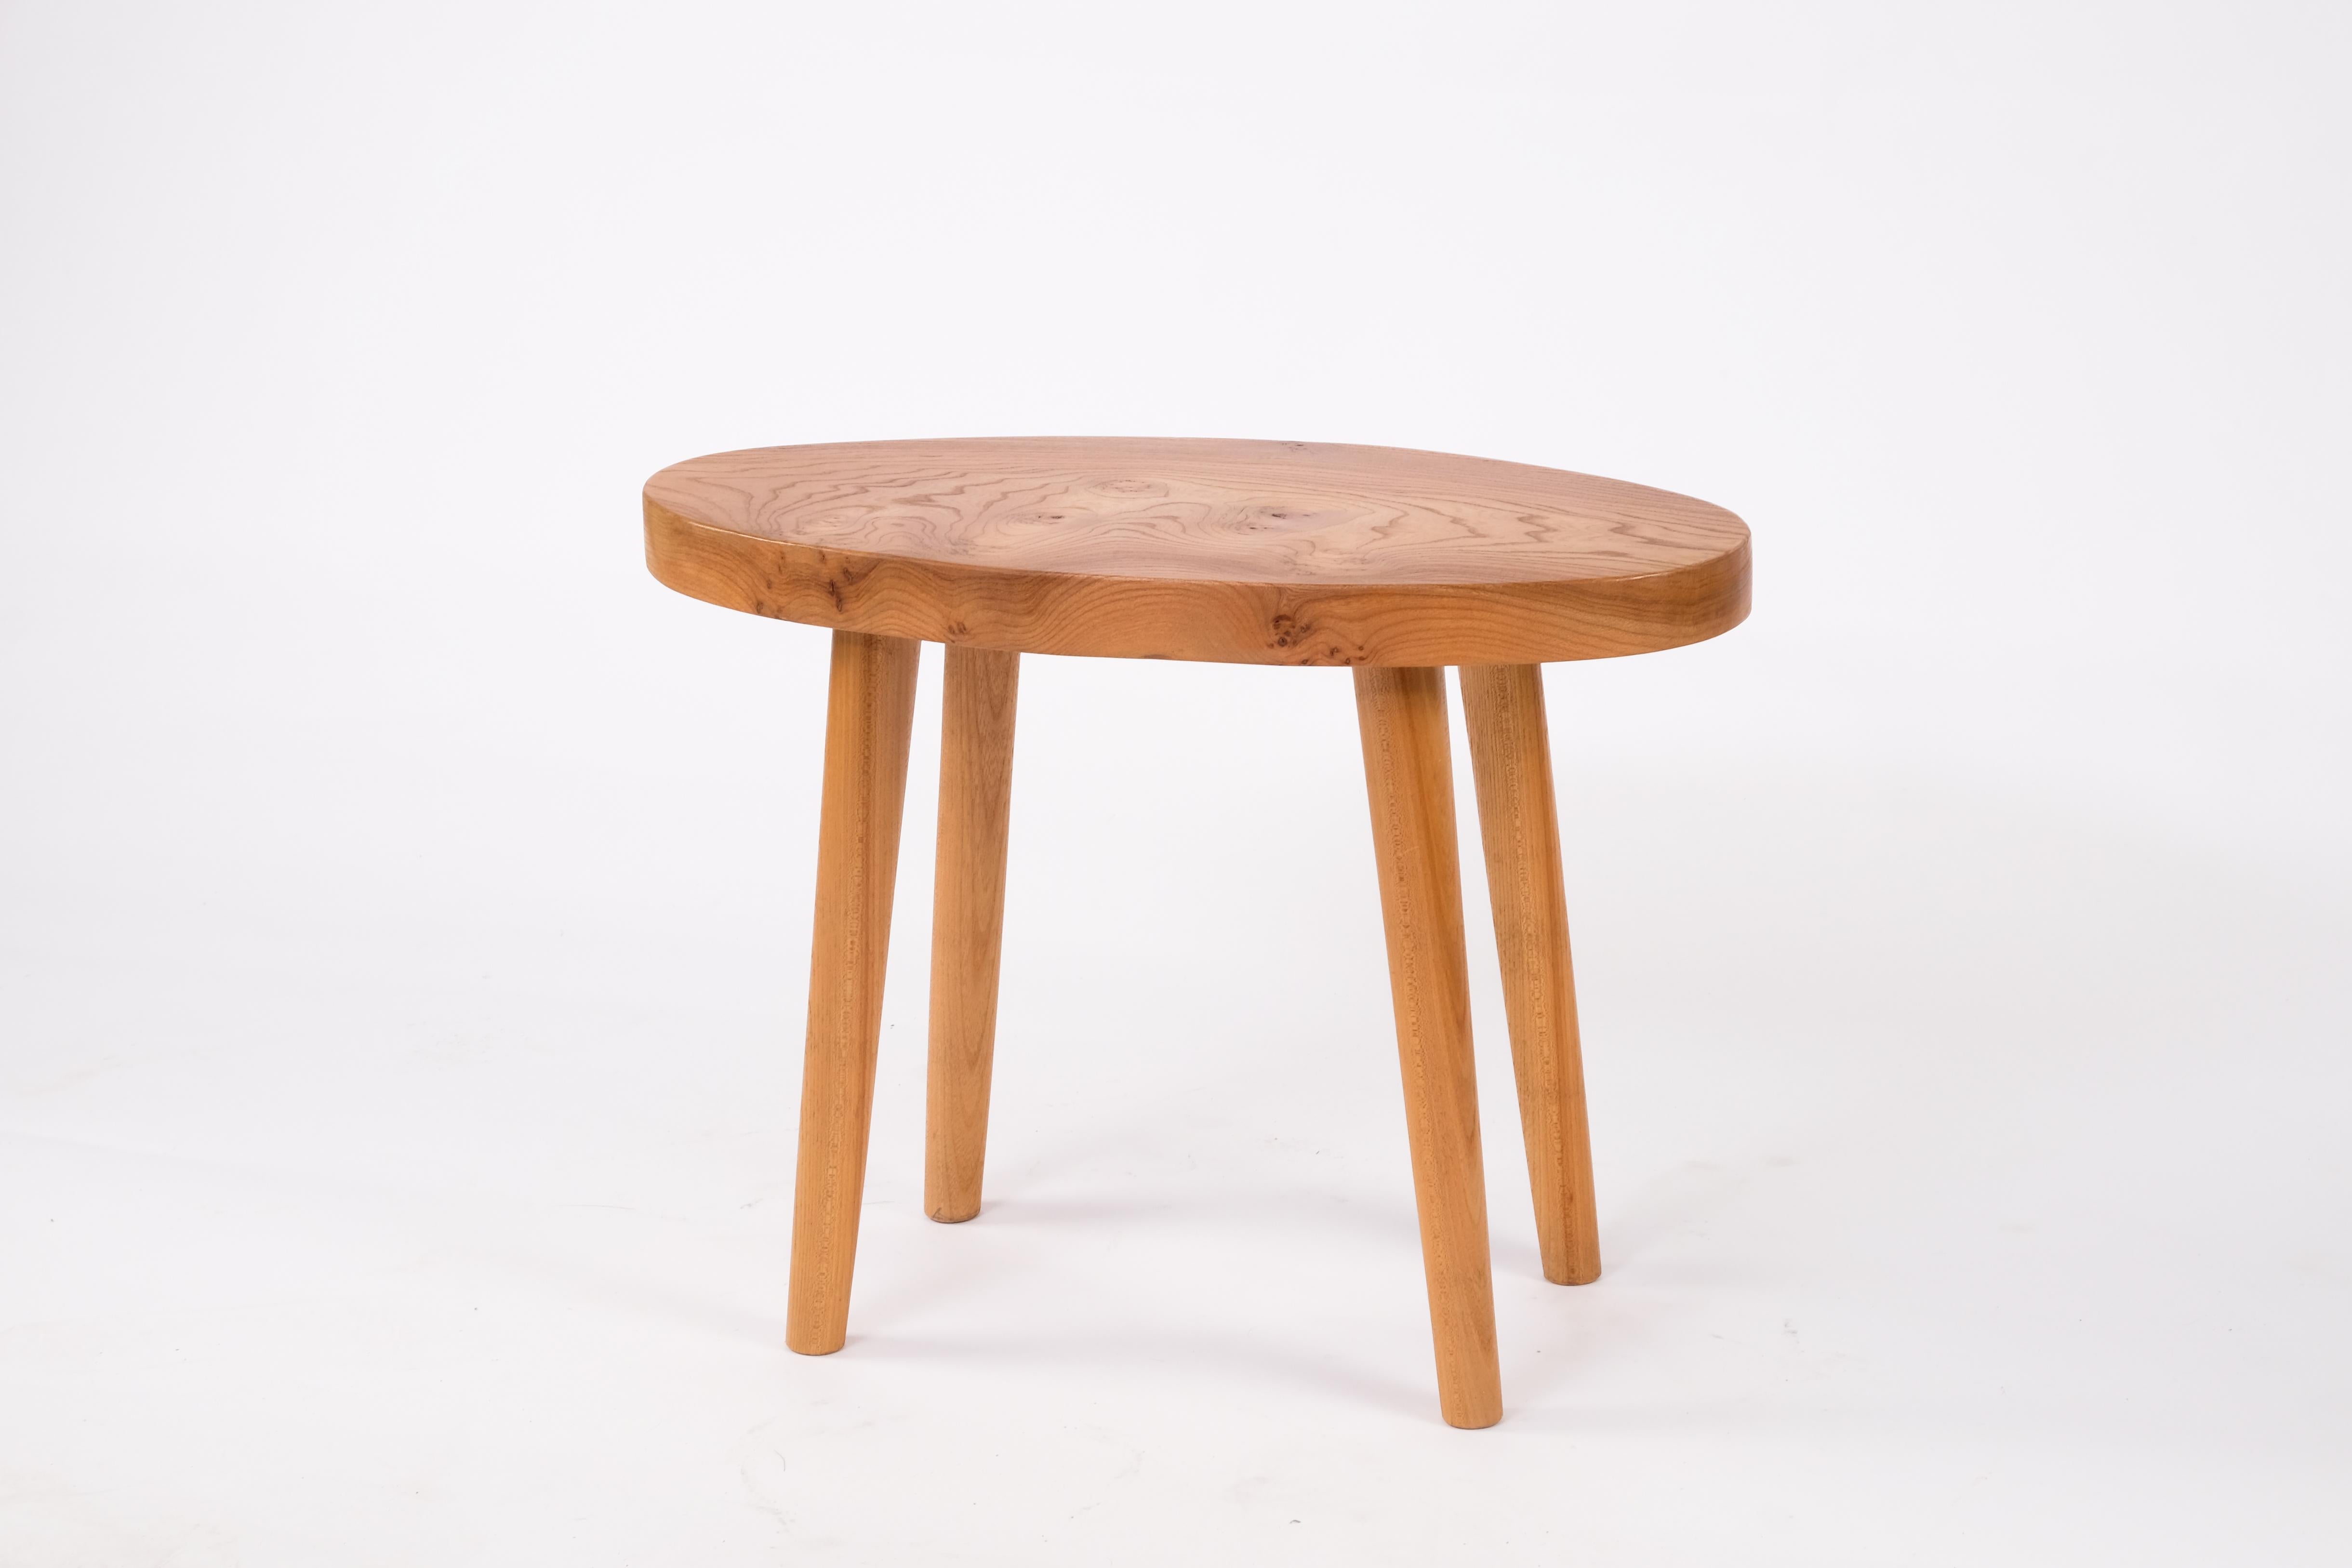 Side table in elmwood produced in Sjöbo by Bertil Johansson, Sweden, 1960s.